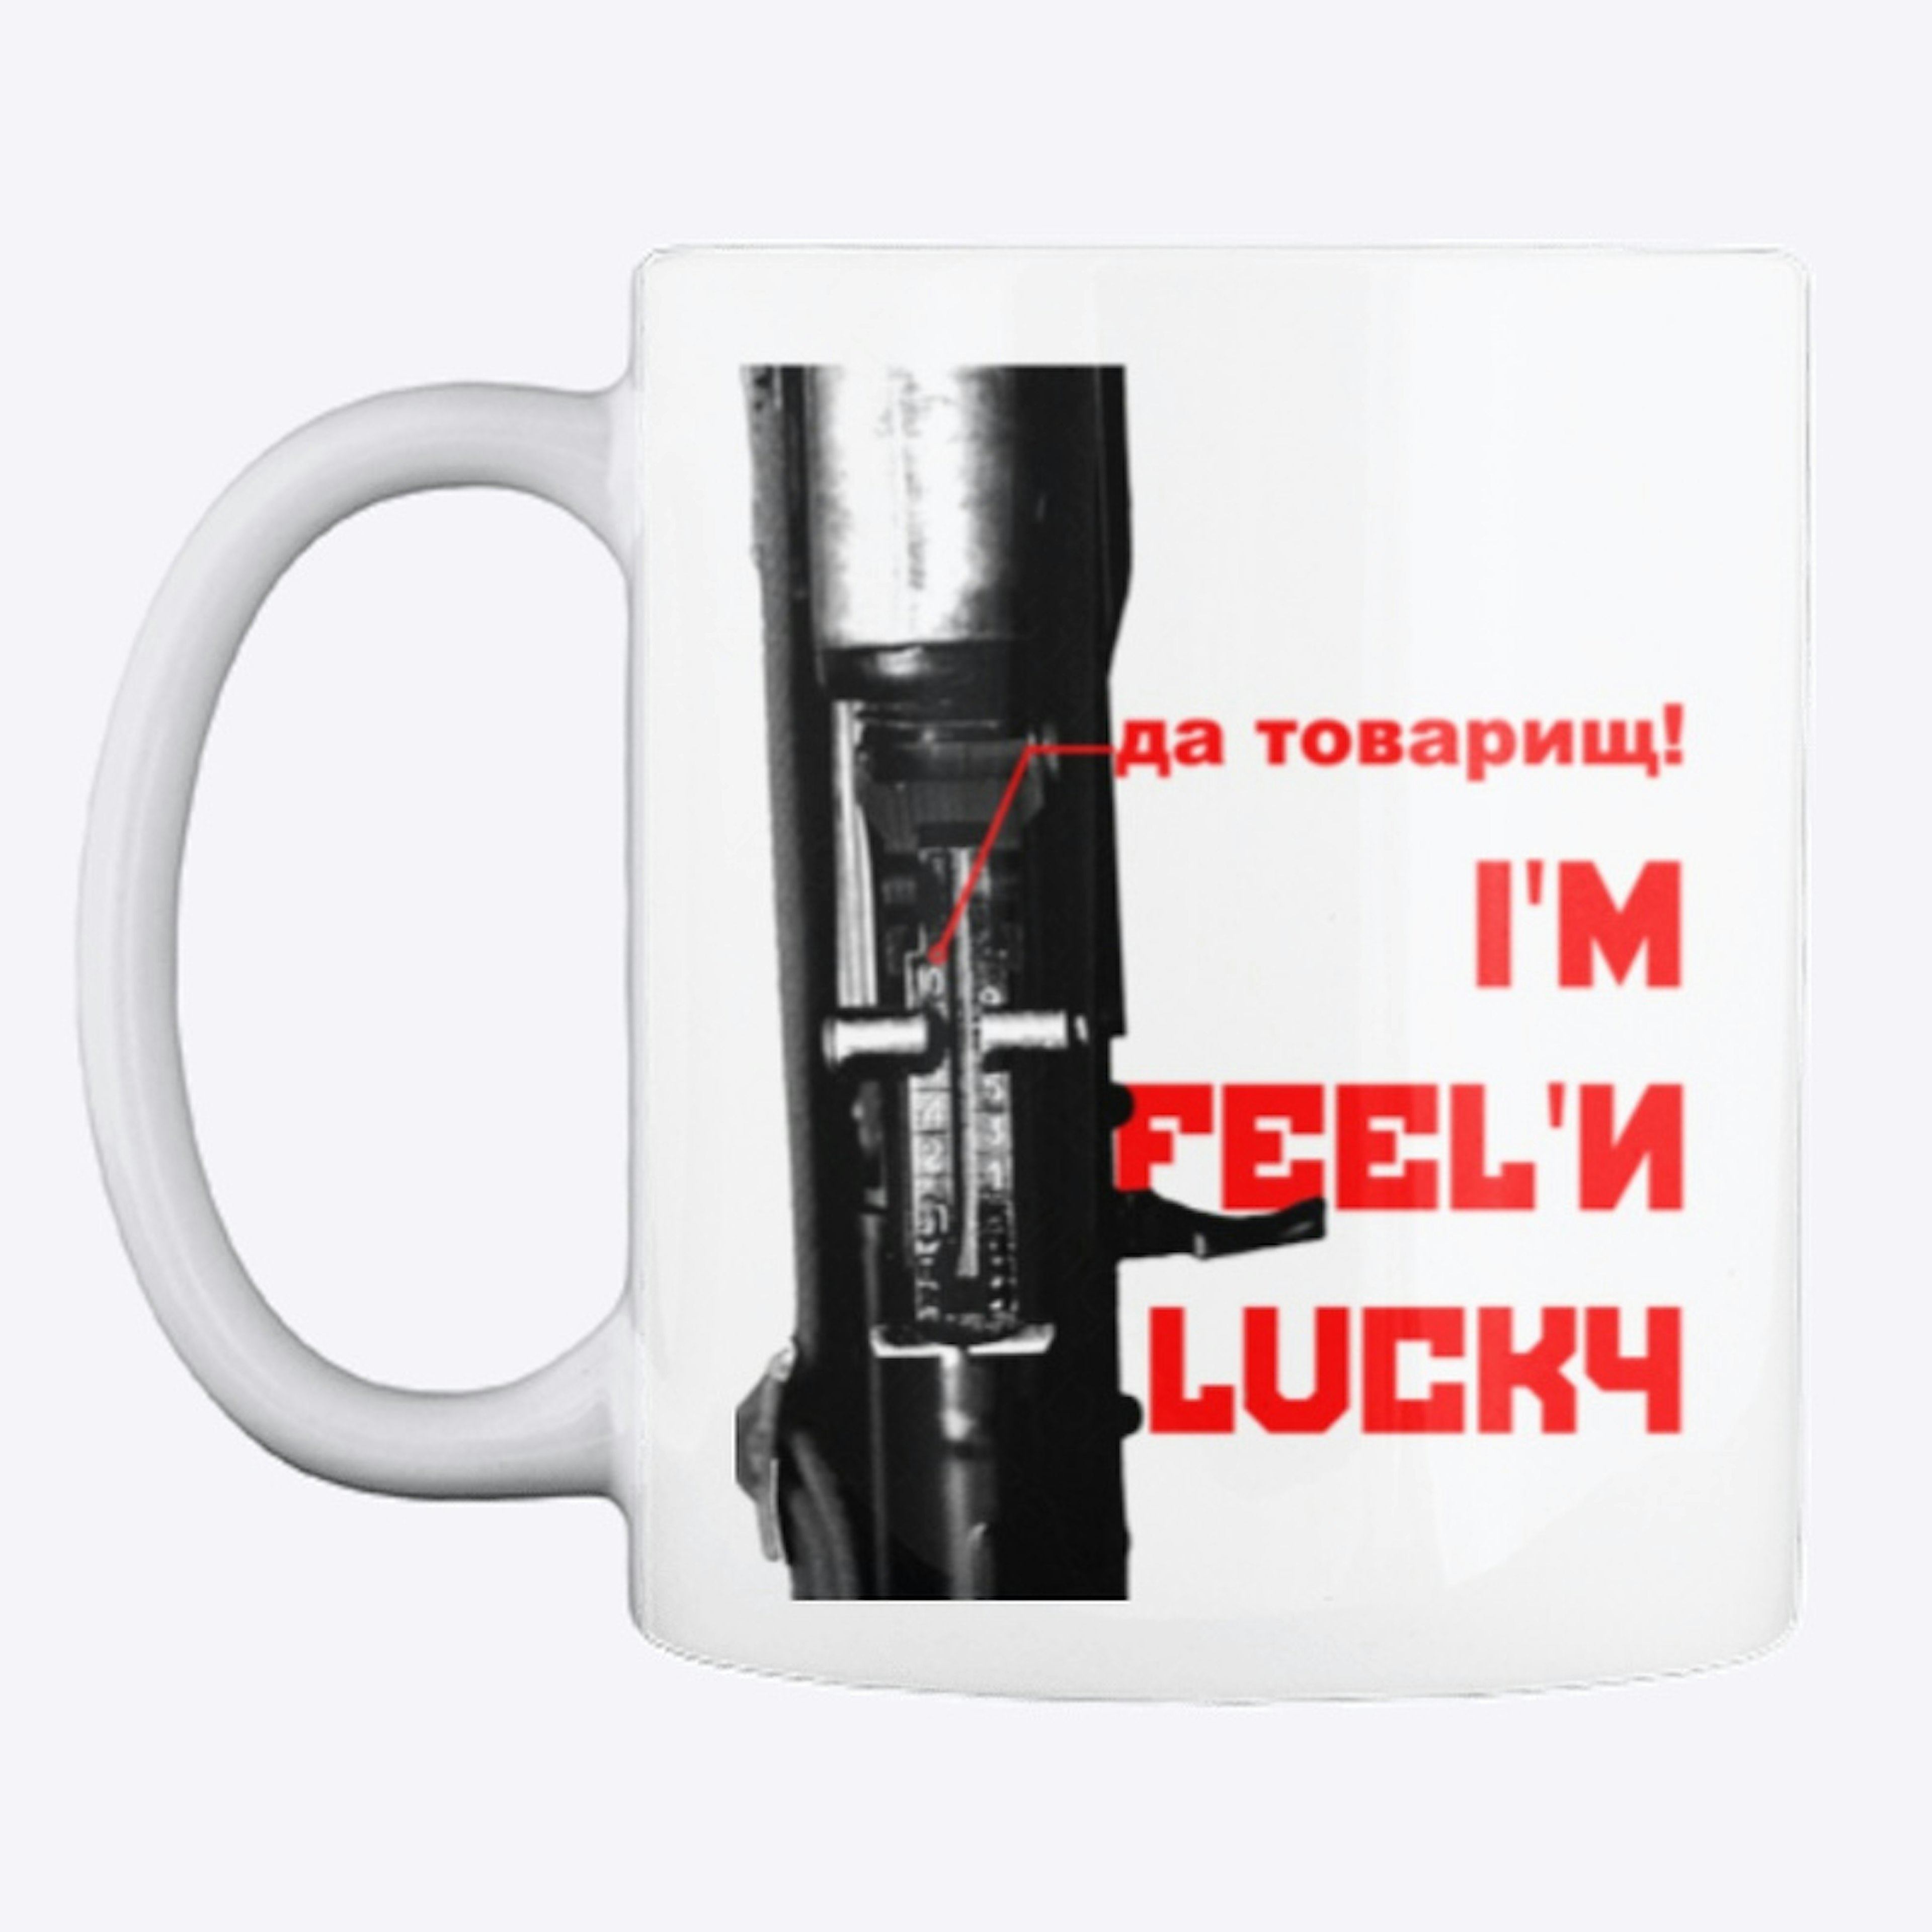 Kalashnikov, "I'm feeling lucky" Mug 1